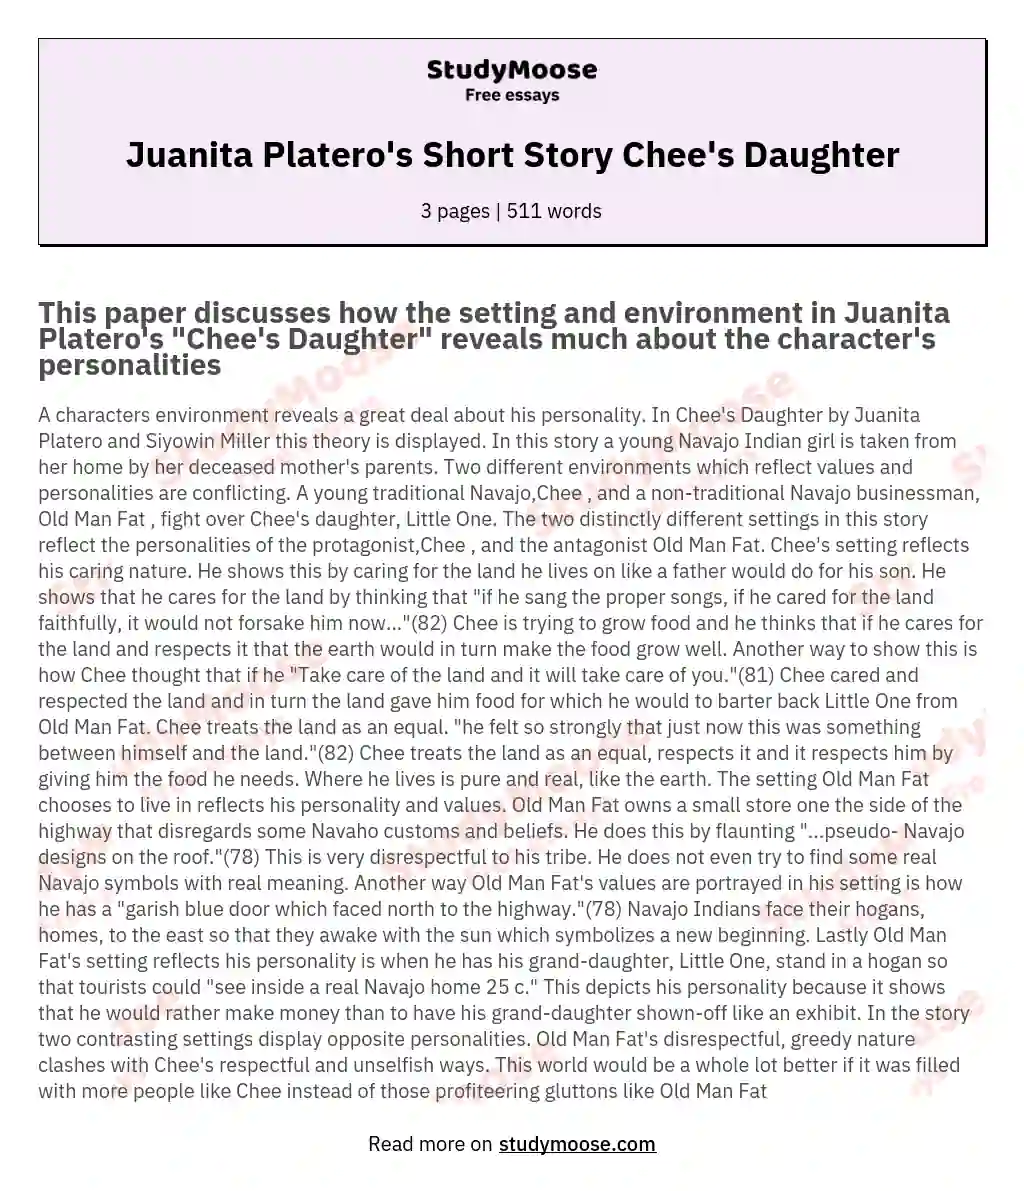 Juanita Platero's Short Story Chee's Daughter essay